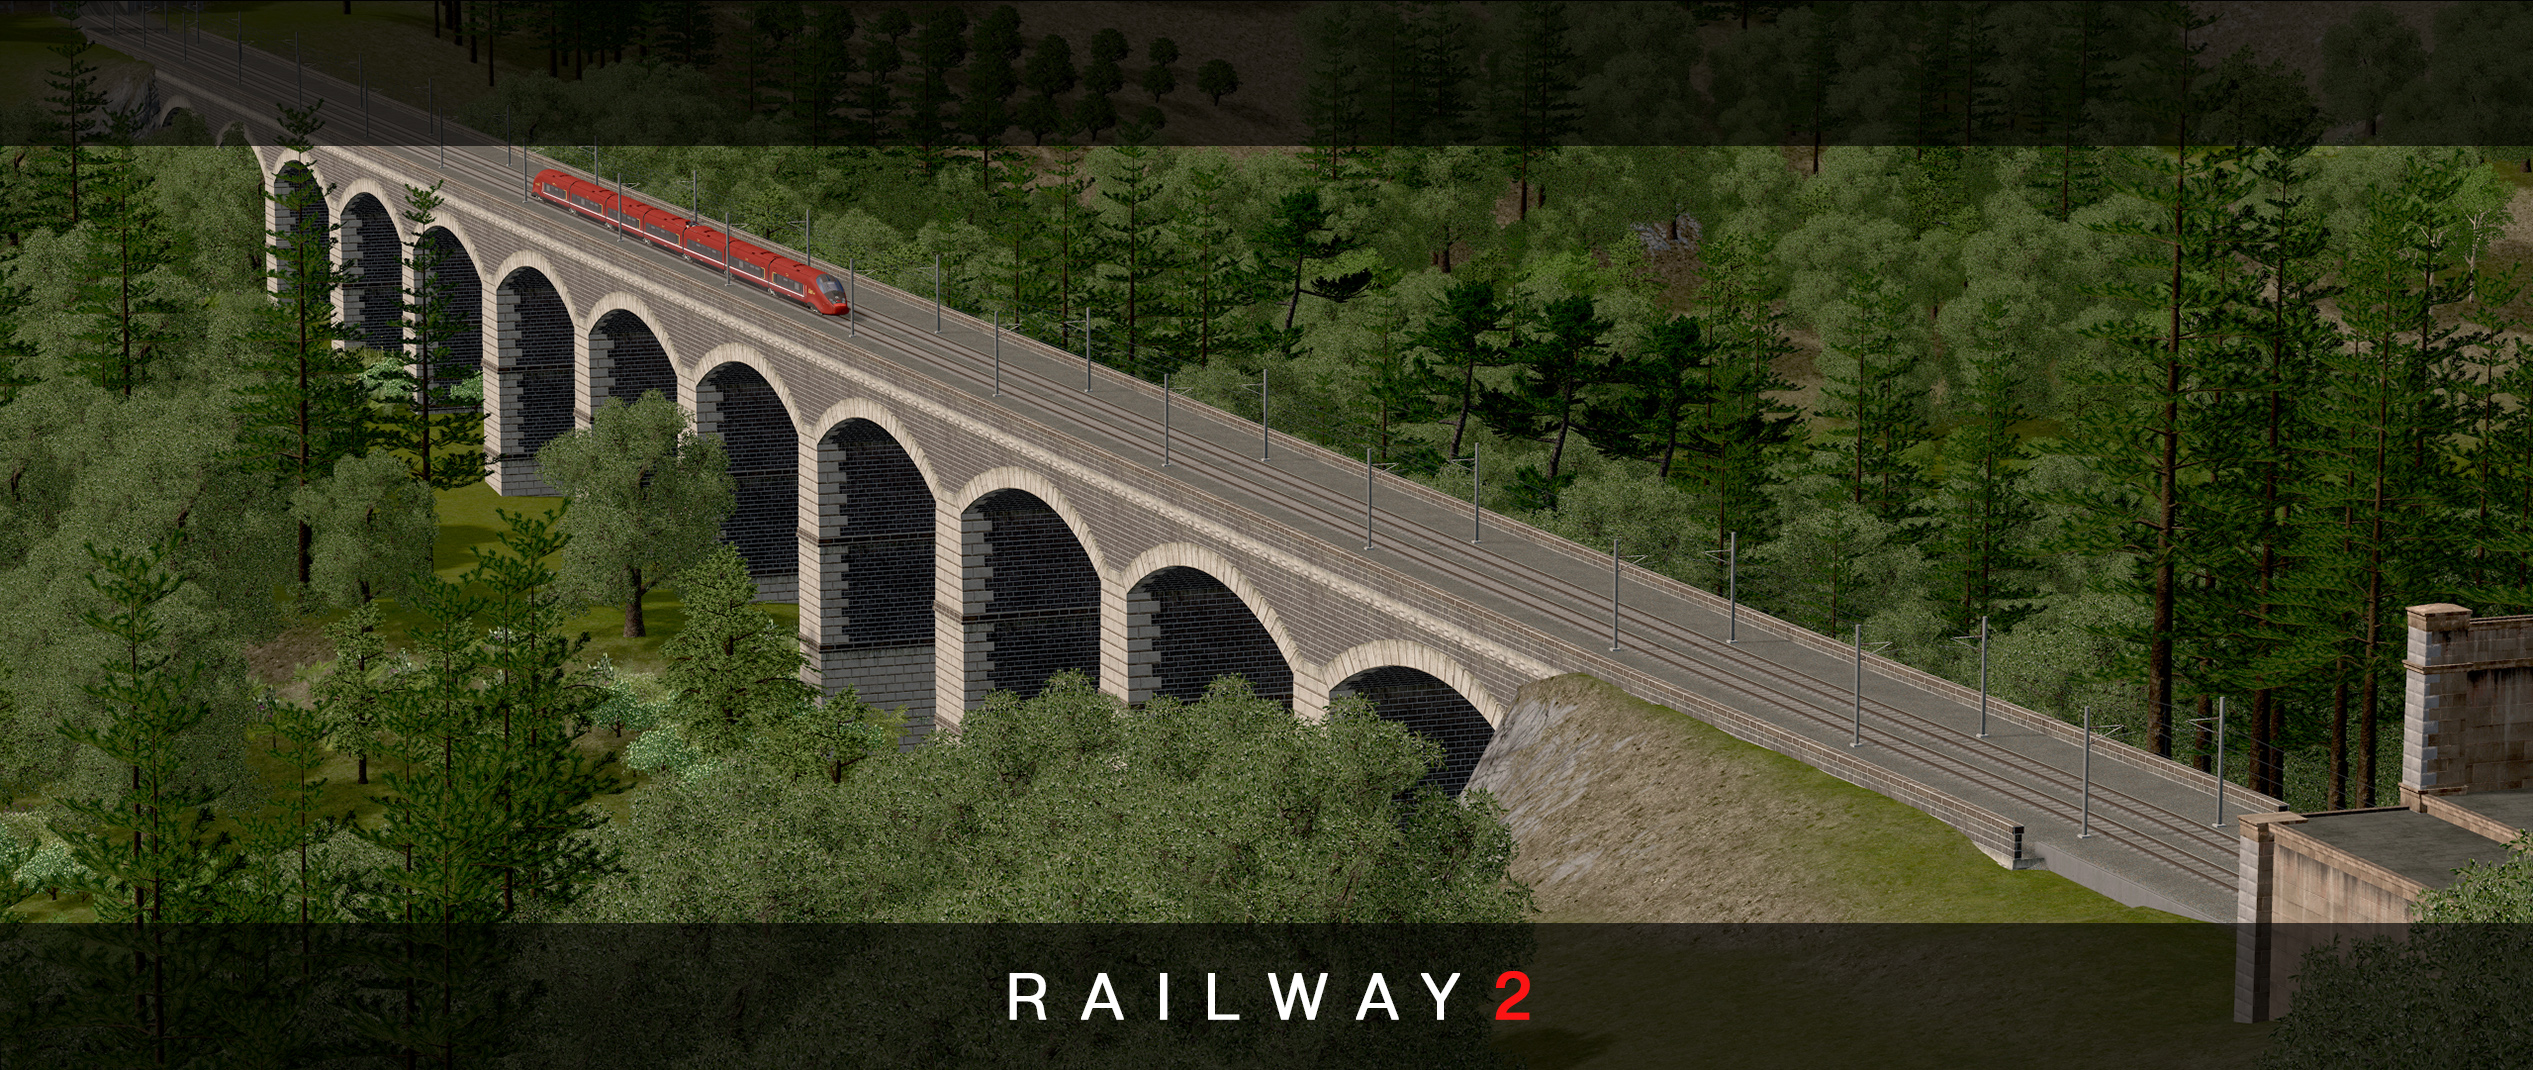 Cities: Skylines List of Railway 2 + Features + Modding Tutorial Information - 5. Bridge Networks - 36328B7